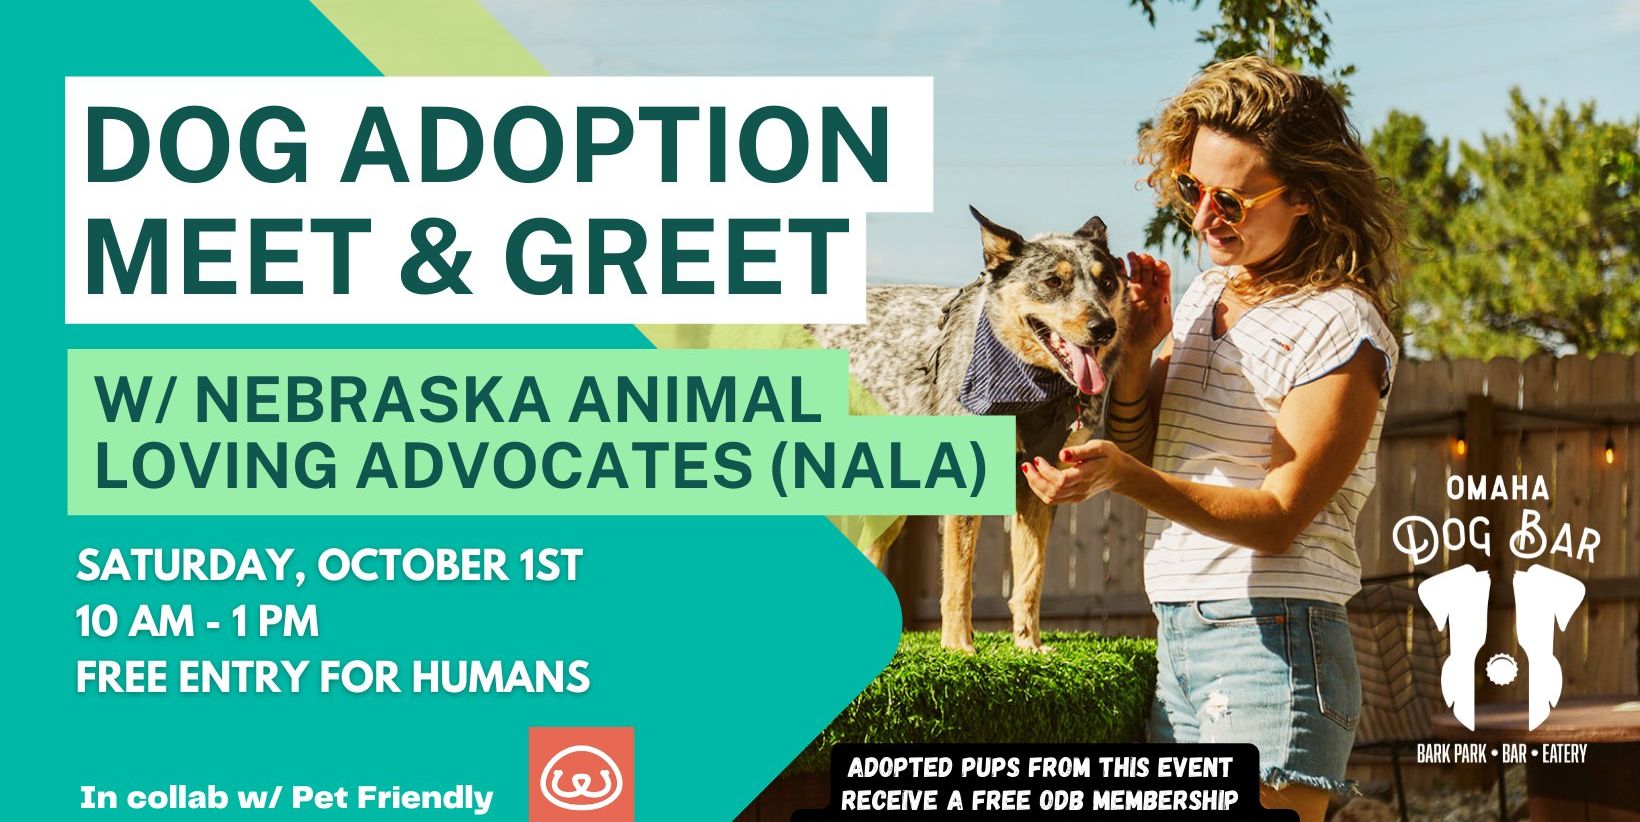 Adoption Meet & Greet w/ NALA at Omaha Dog Bar promotional image